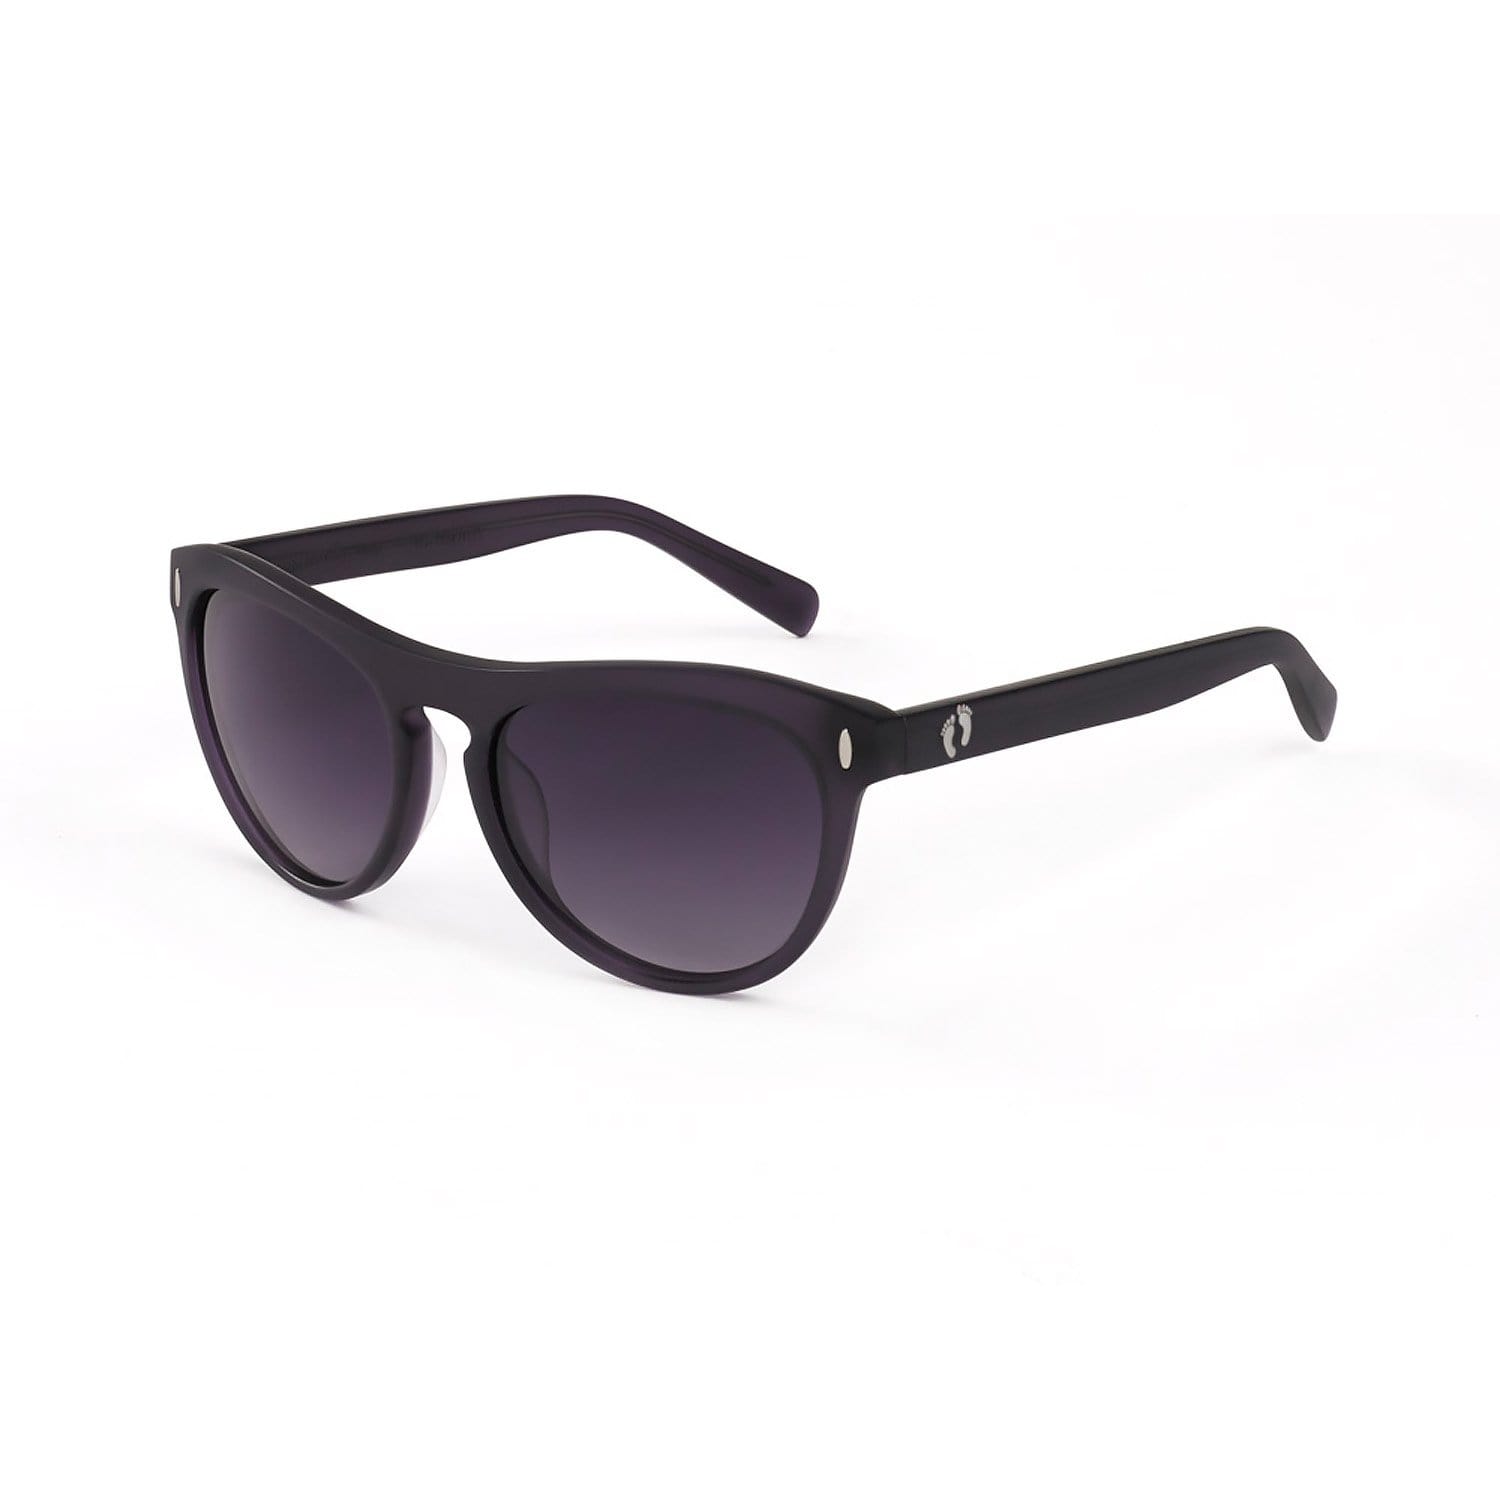 Hang Ten Gold Apparel : Eyewear - Sunglasses Hang Ten Gold The Beach Ley-Purple Frame-Smoke Lens